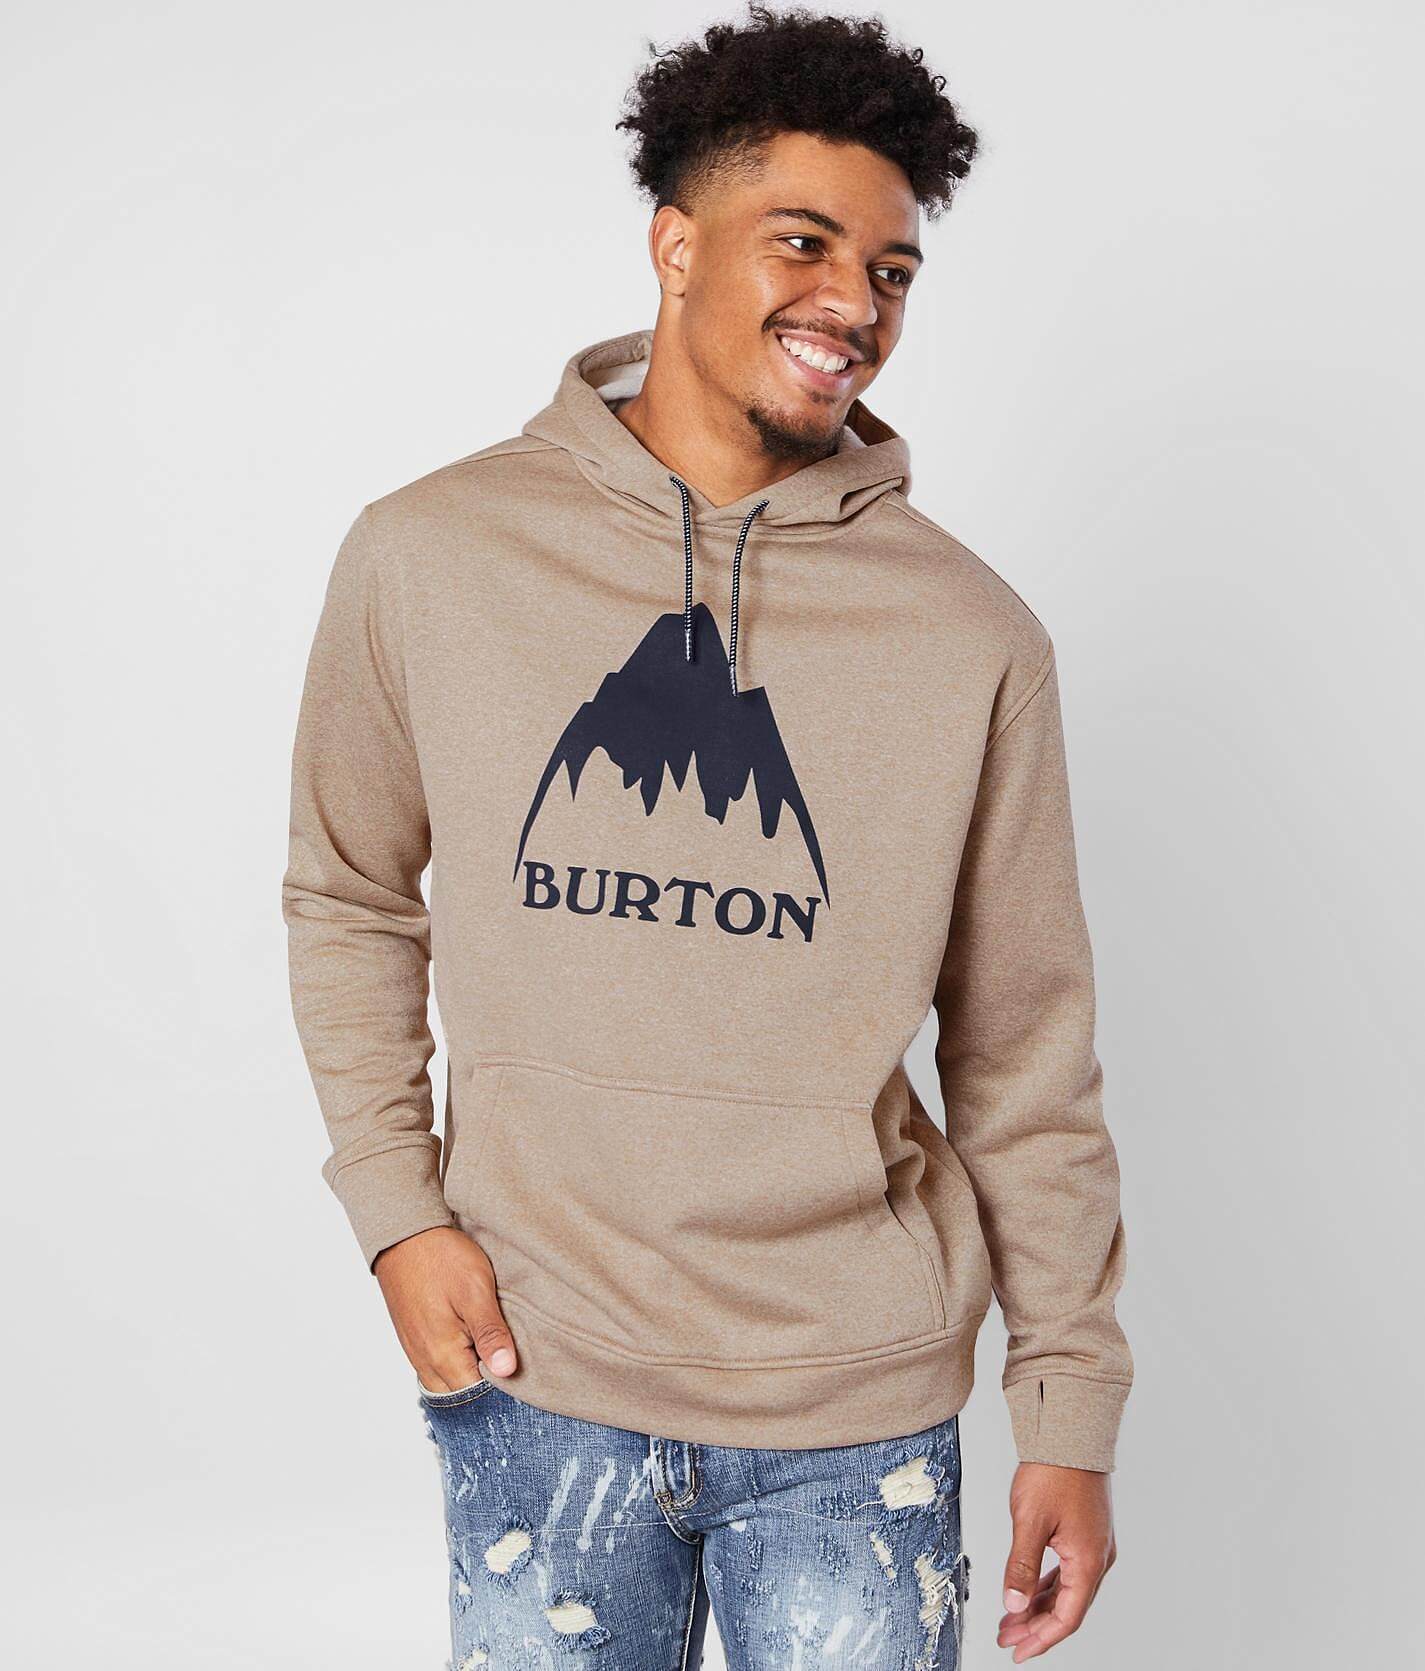 burton sweatshirts